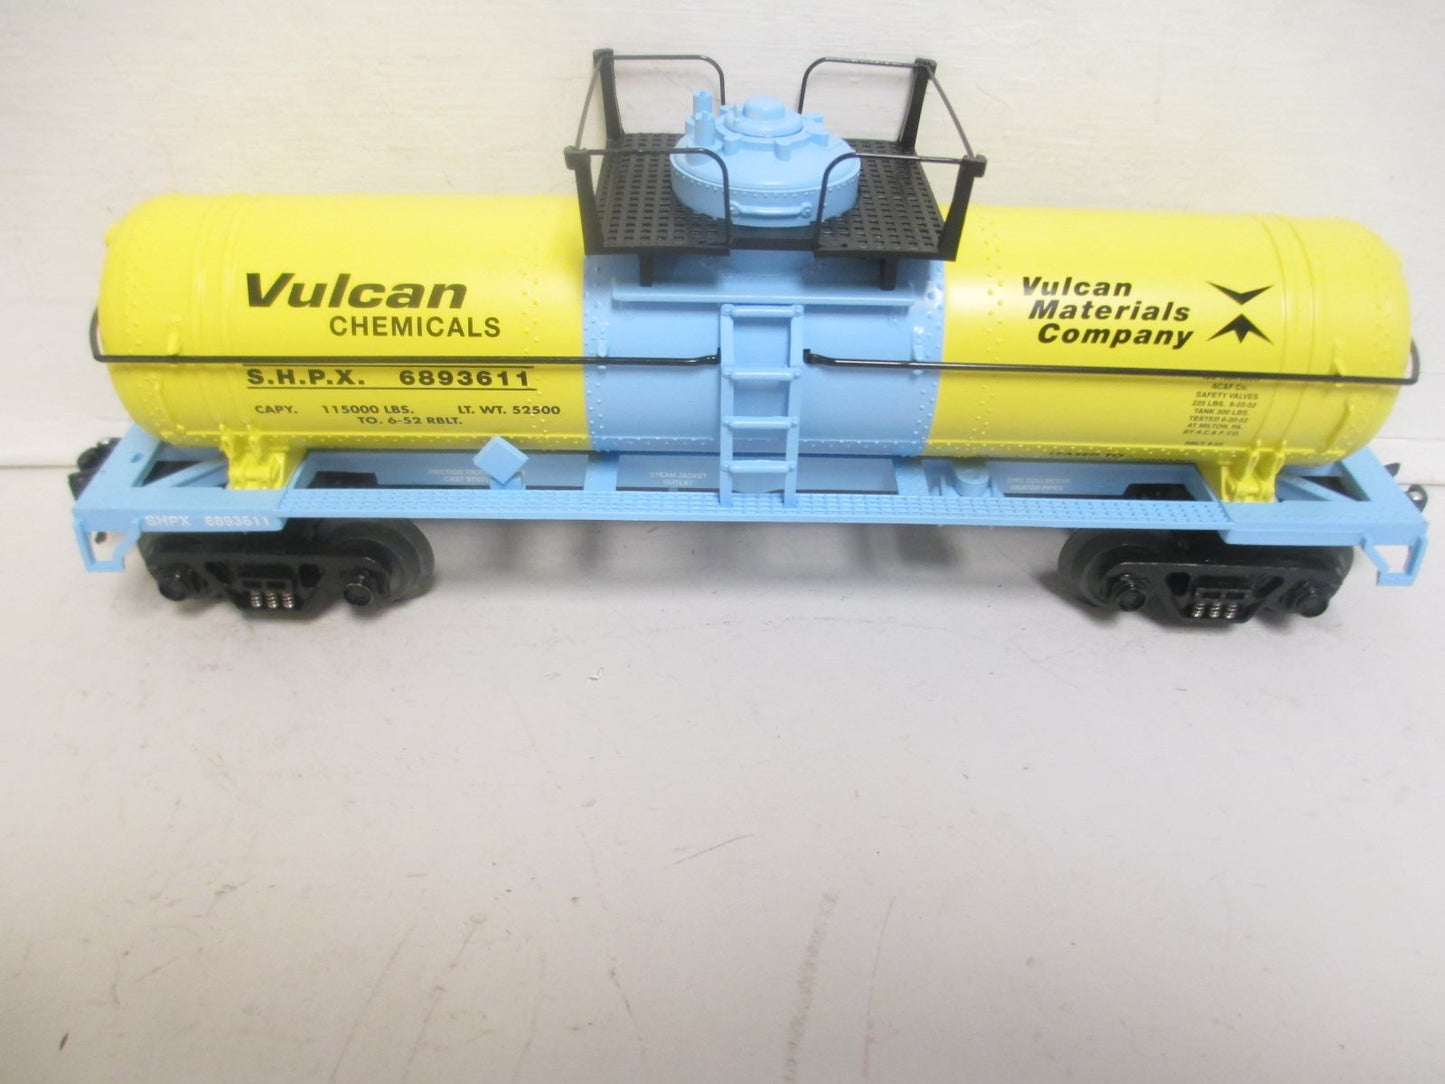 O-Line 162 Vulcan Chemical Tank Car #6893611